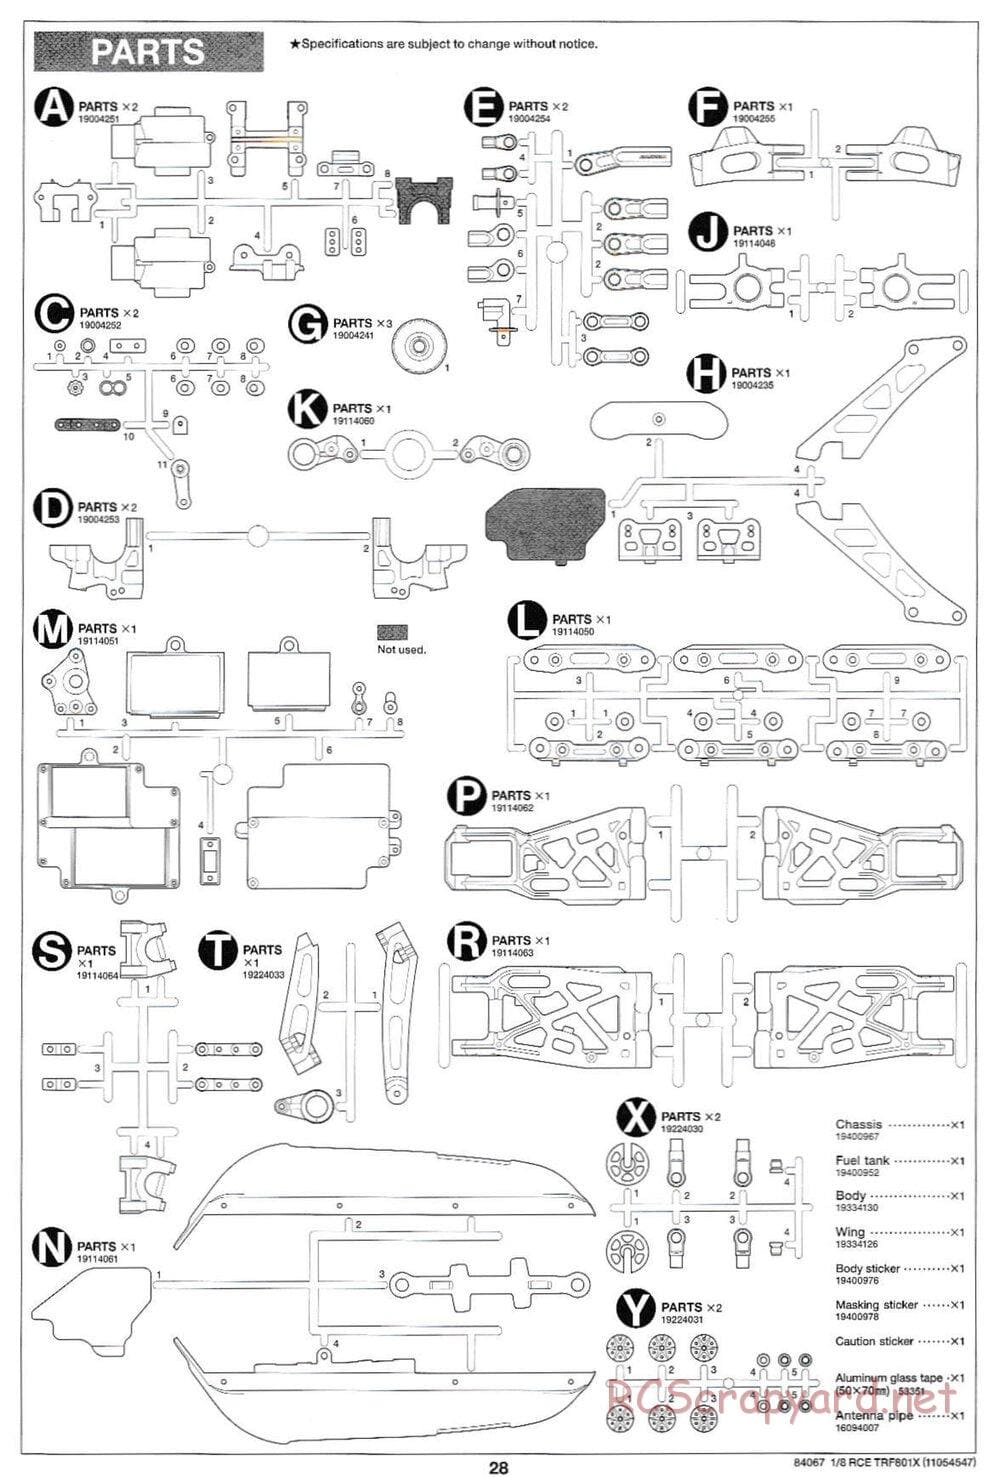 Tamiya - TRF801X Chassis - Manual - Page 28